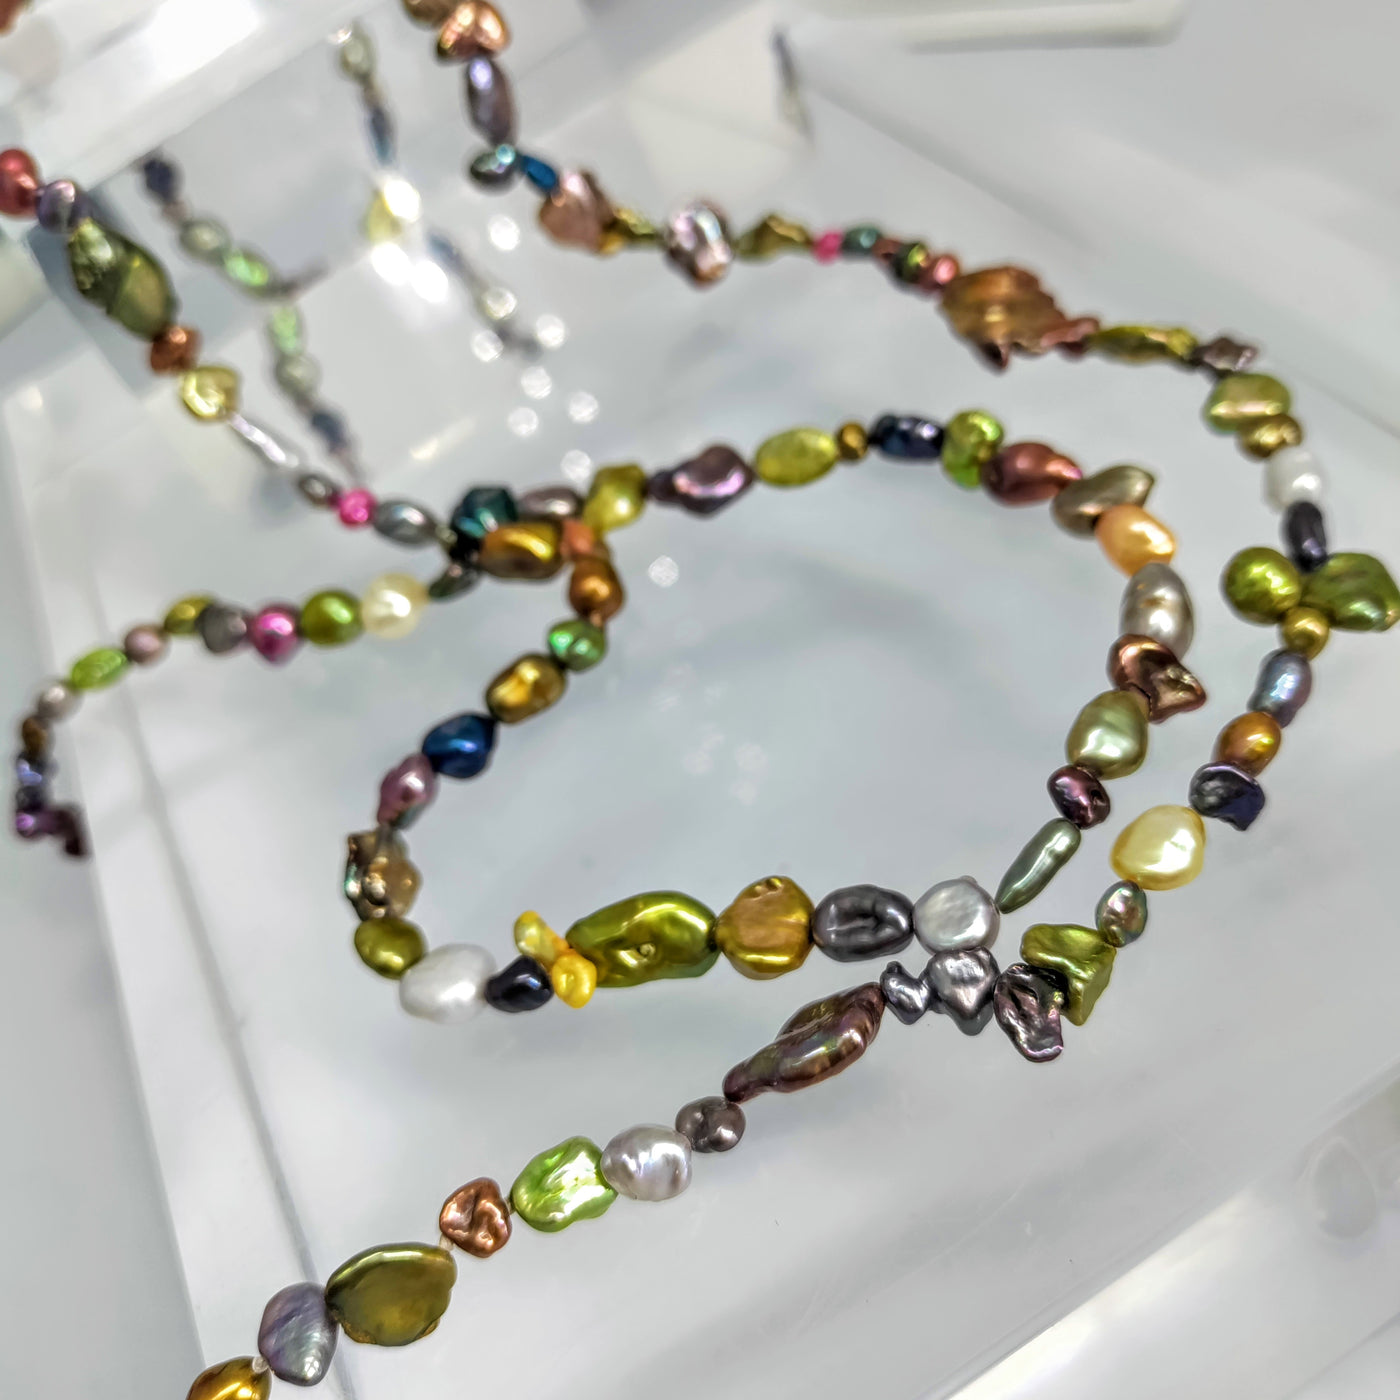 "Rainbow Tango" Necklace - Pearls